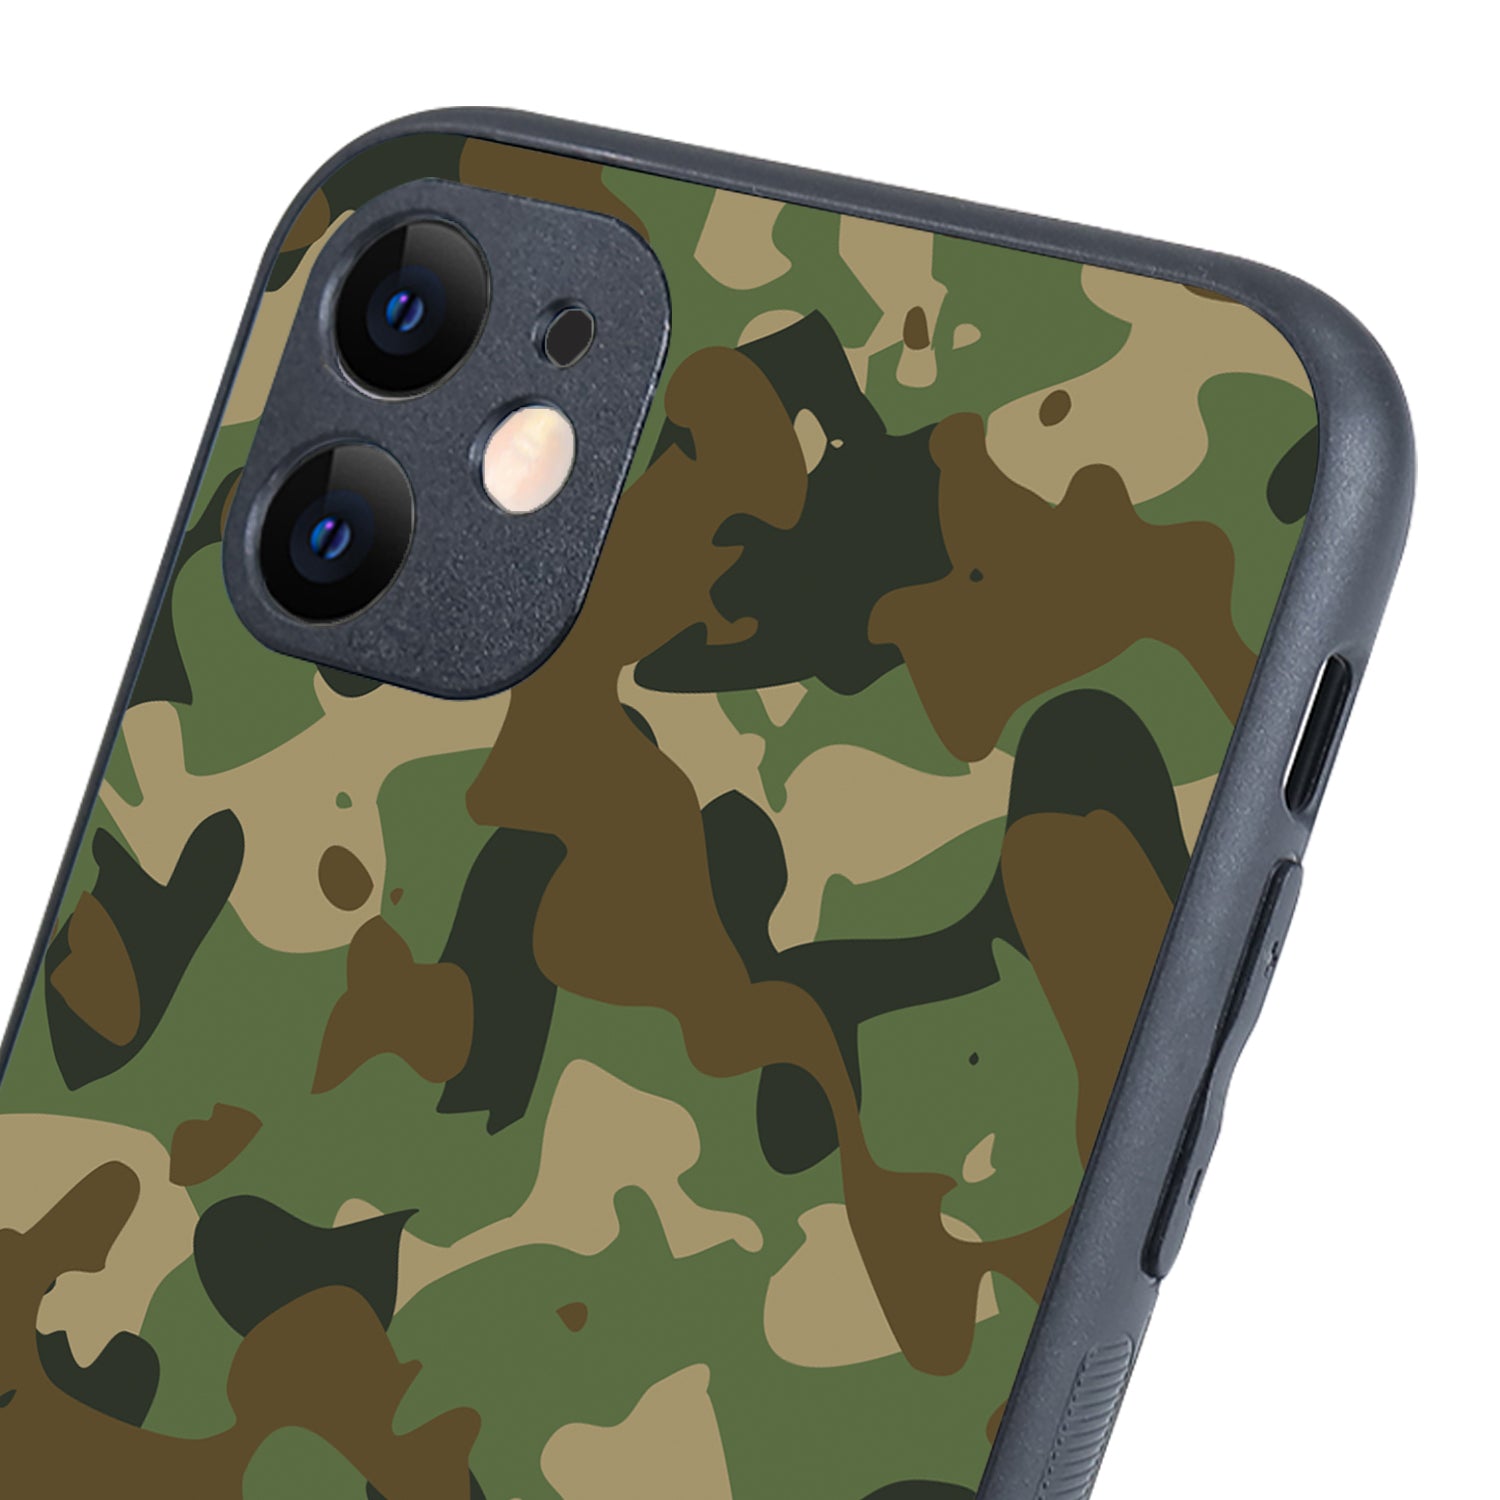 Camouflage Design iPhone 11 Case